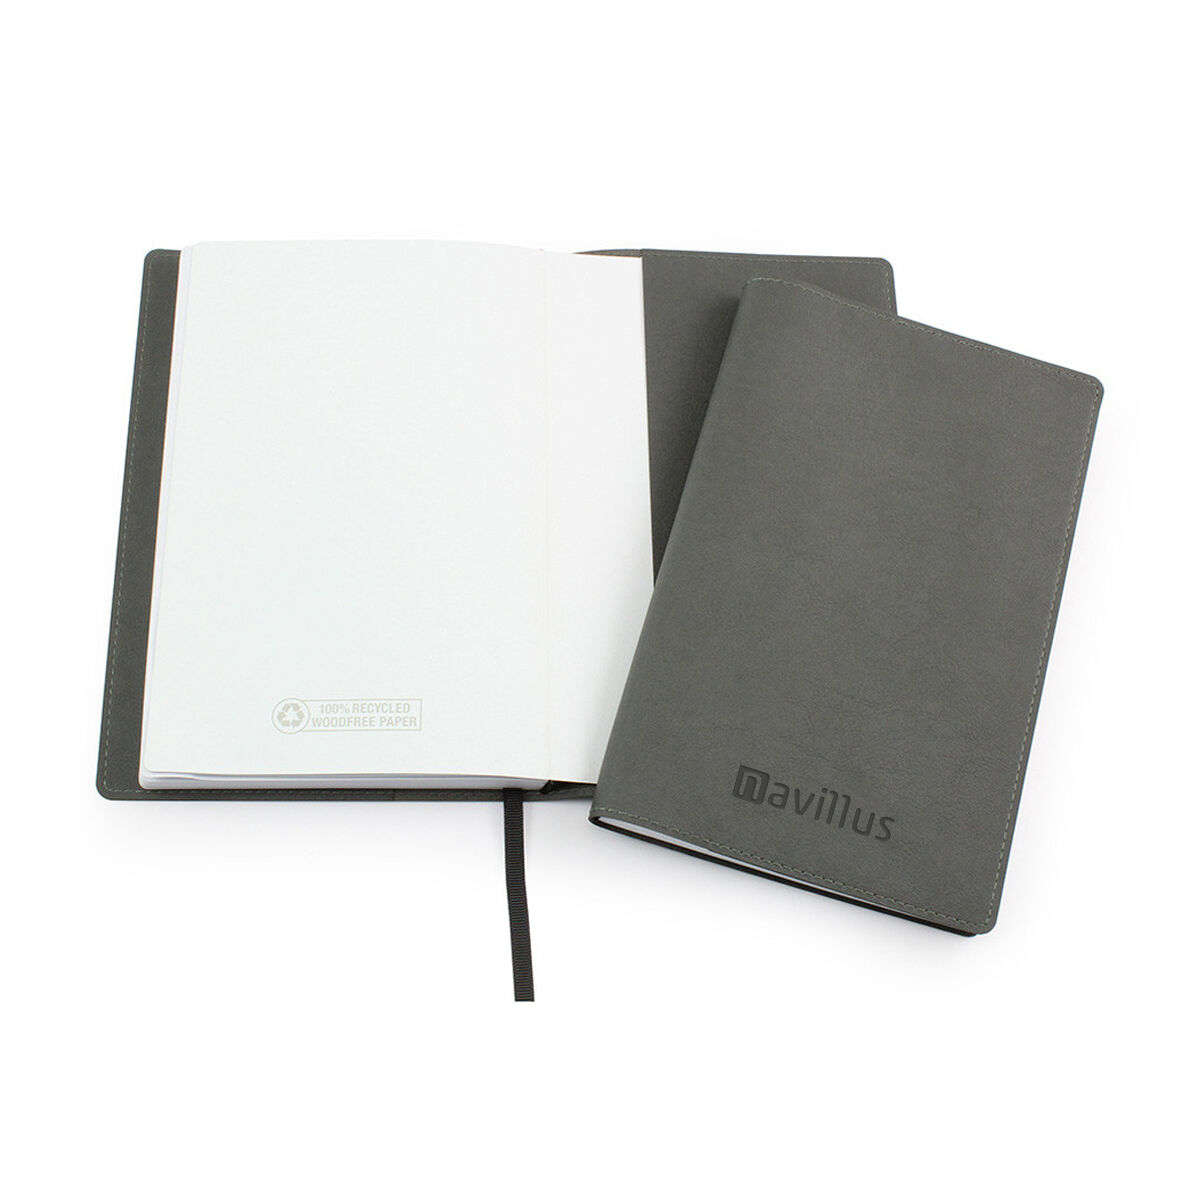 Biodegradable Notebooks embossed